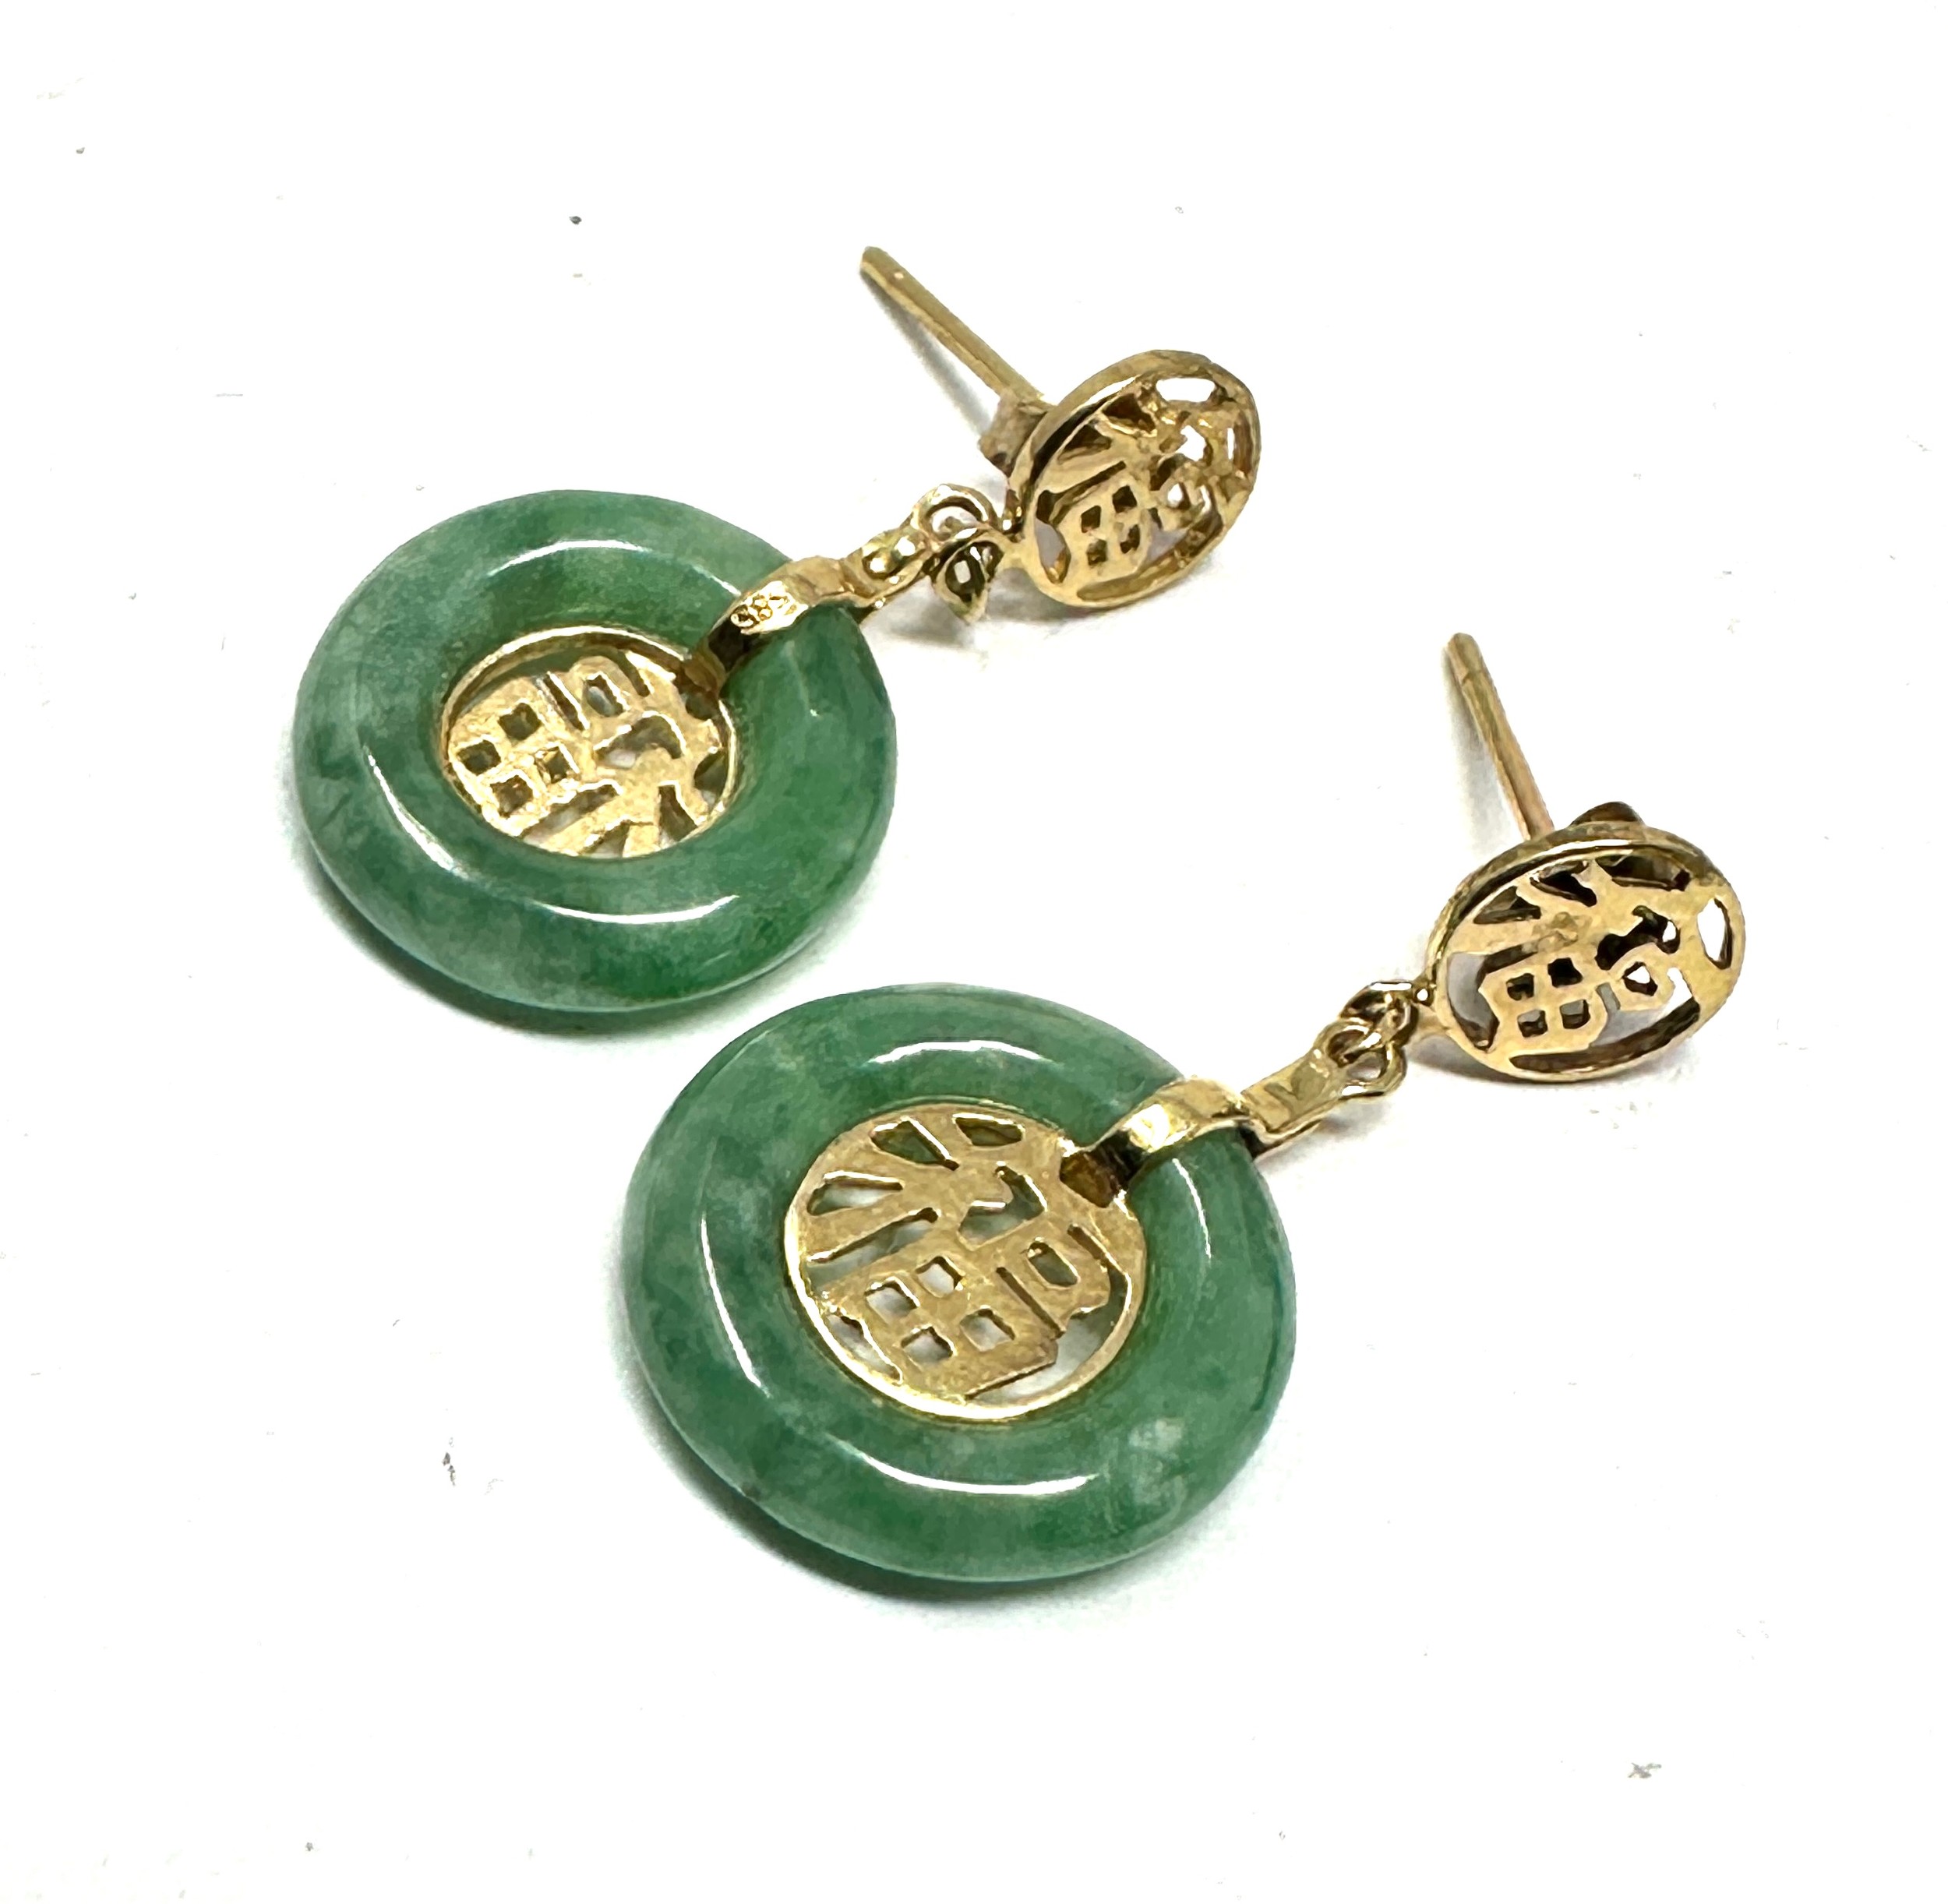 14ct gold jade drop earrings (3.1g)